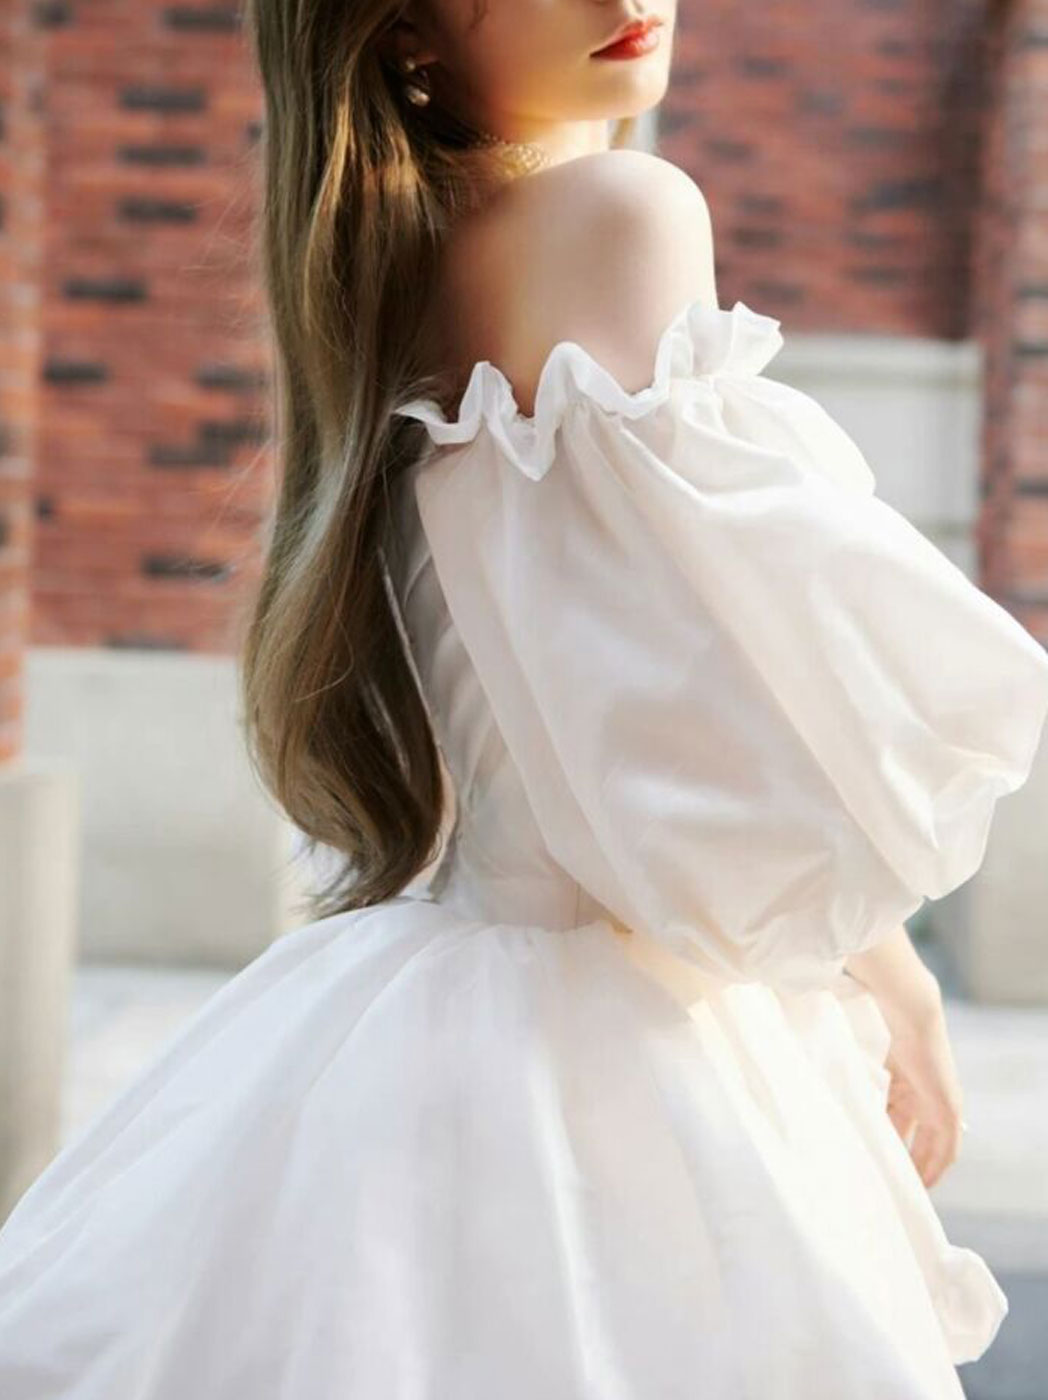 Cute white long sleeve taffeta short prom dress white evening dress